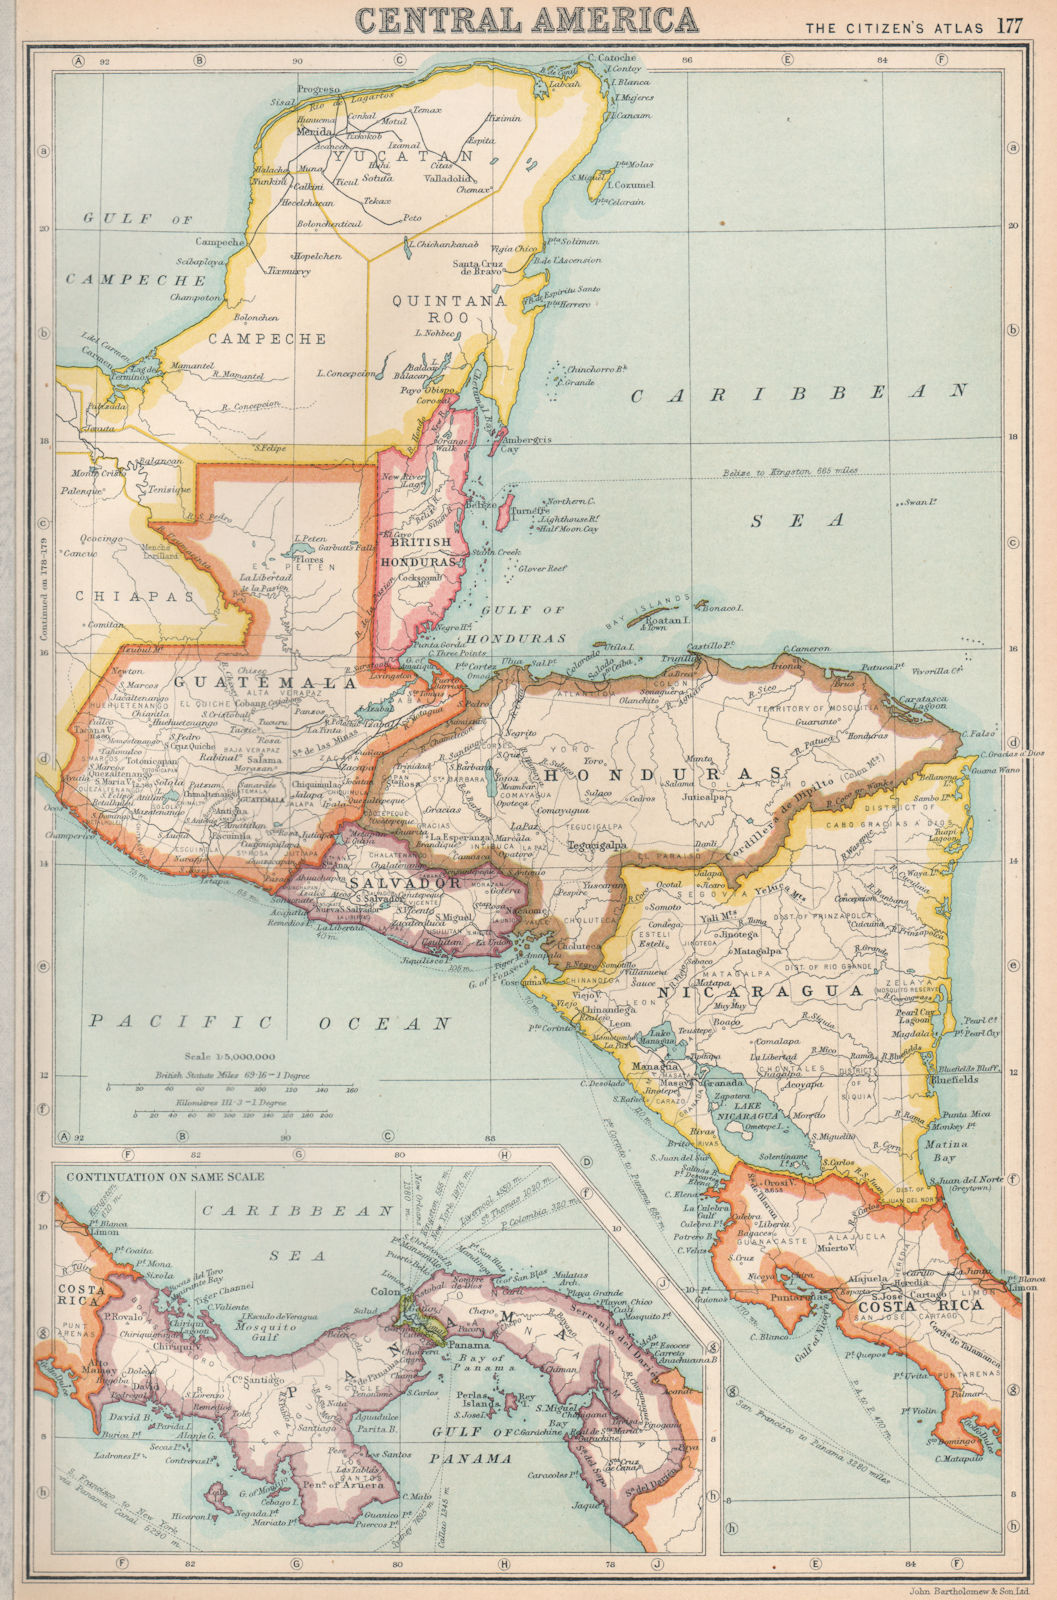 CENTRAL AMERICA. US Panama canal zone ownership shown. BARTHOLOMEW 1924 map